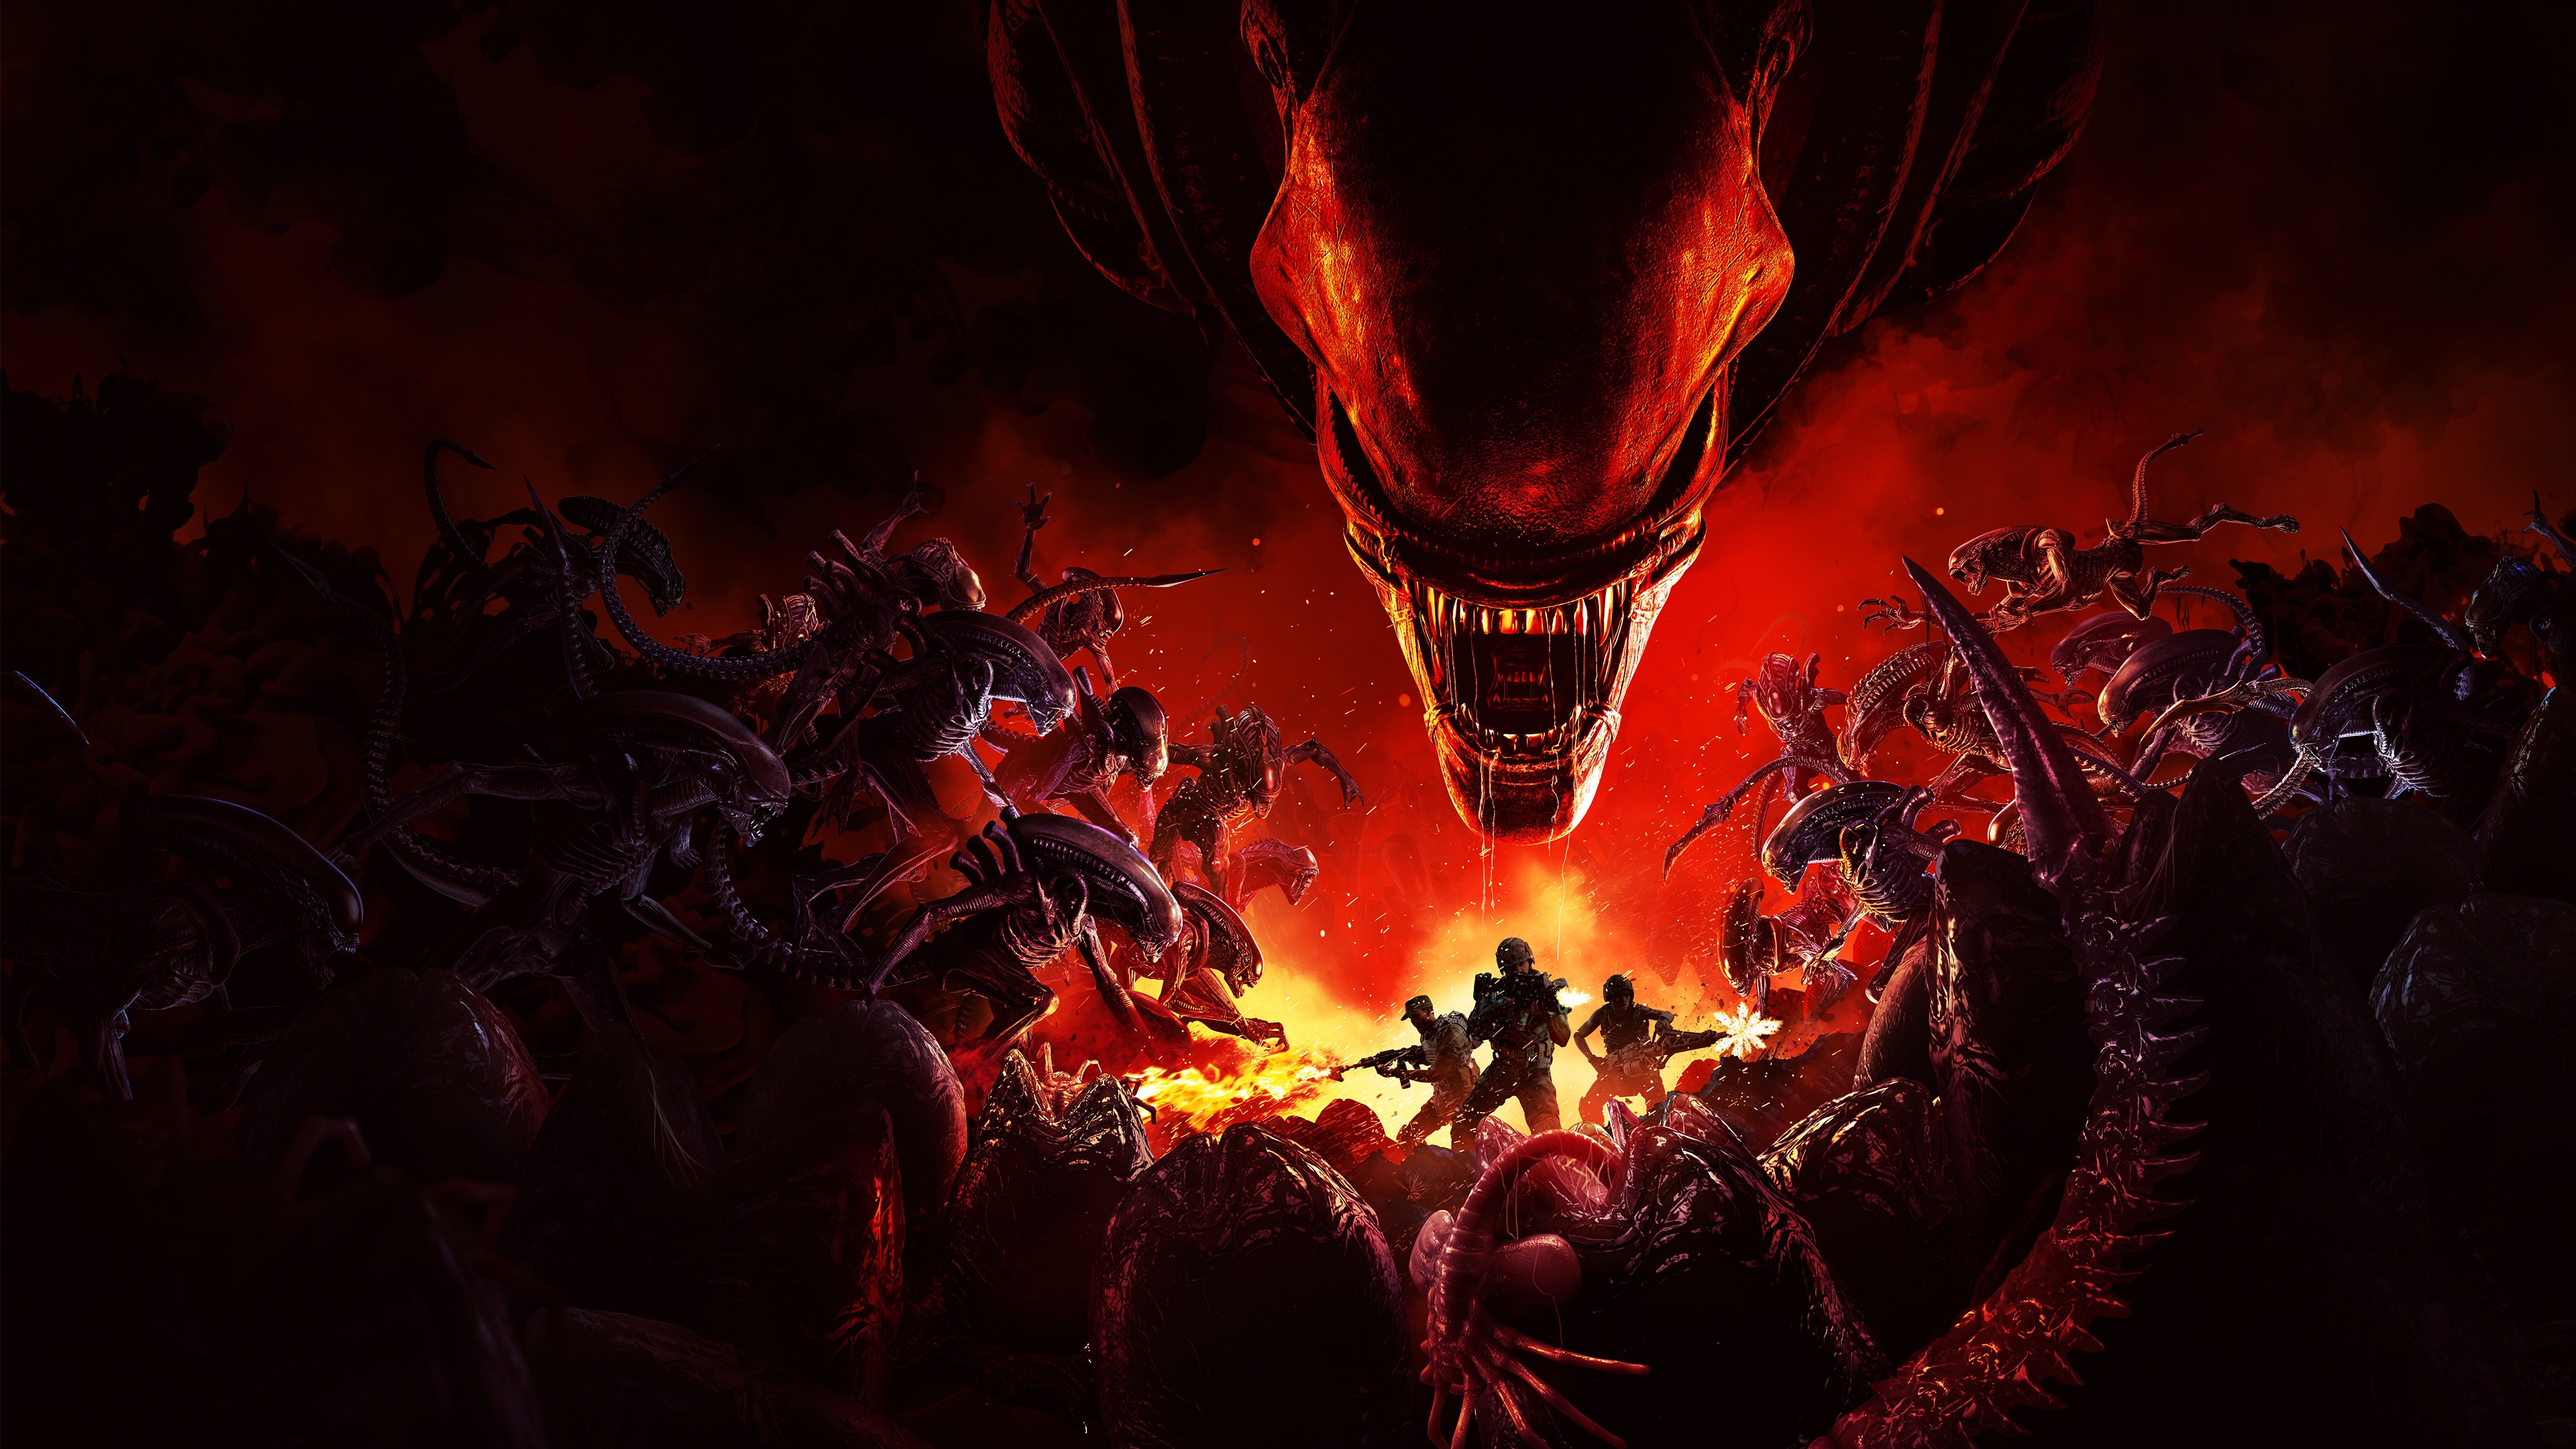 Video Game Aliens: Fireteam Elite HD Wallpaper | Background Image